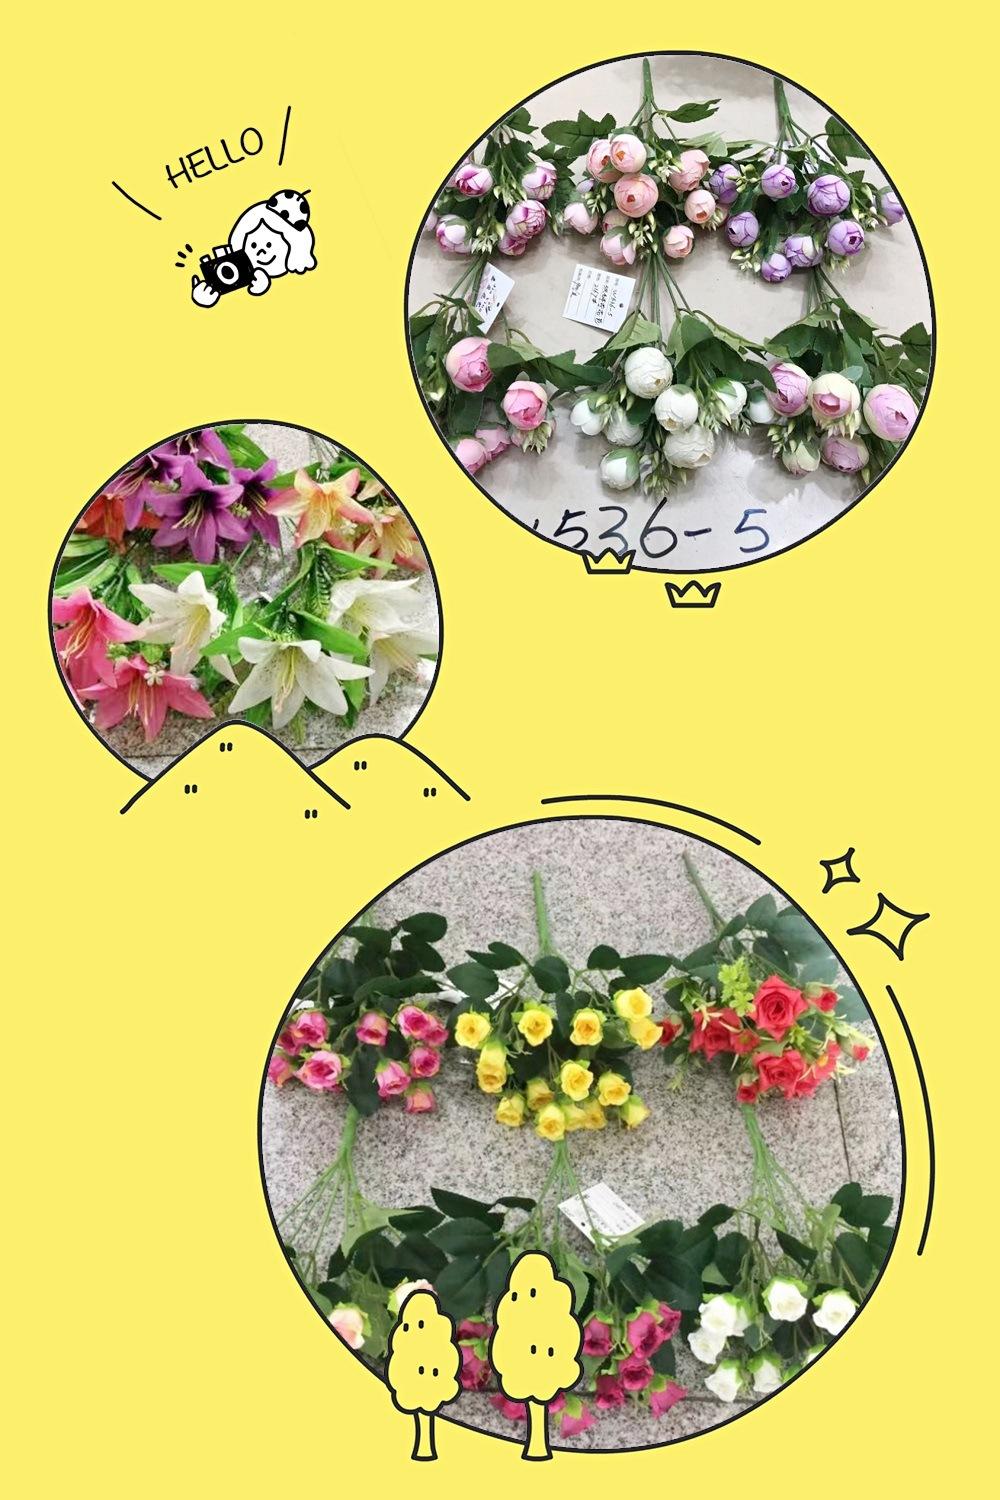 Artificial Real Touch Flower Arrangement Bouquet for Home Office Wedding Decoration